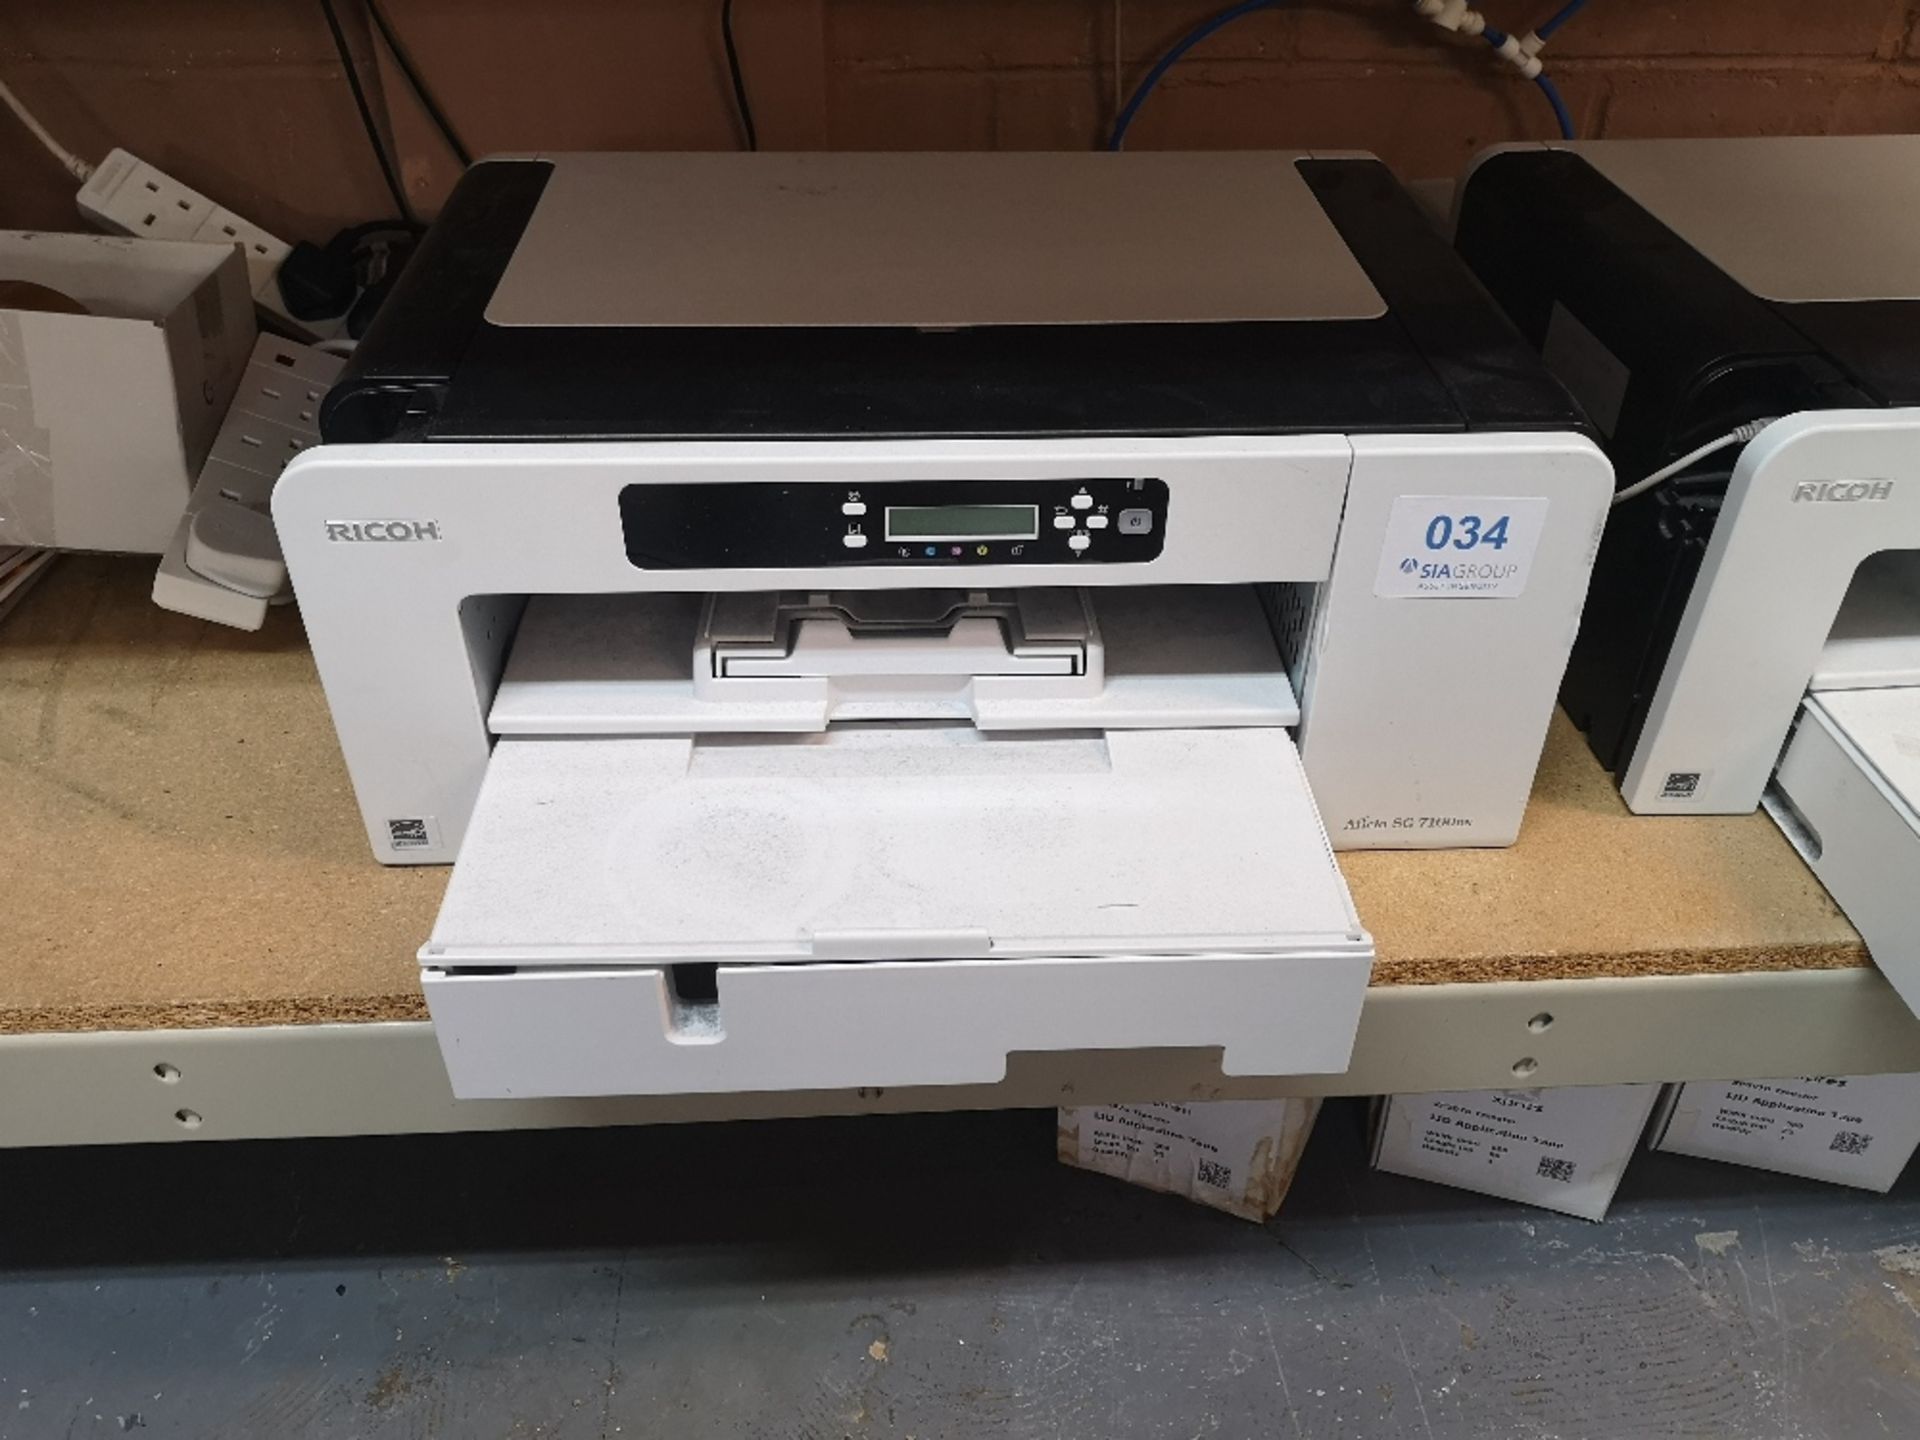 Ricoh SG 7100dn A3 Geljet Printer